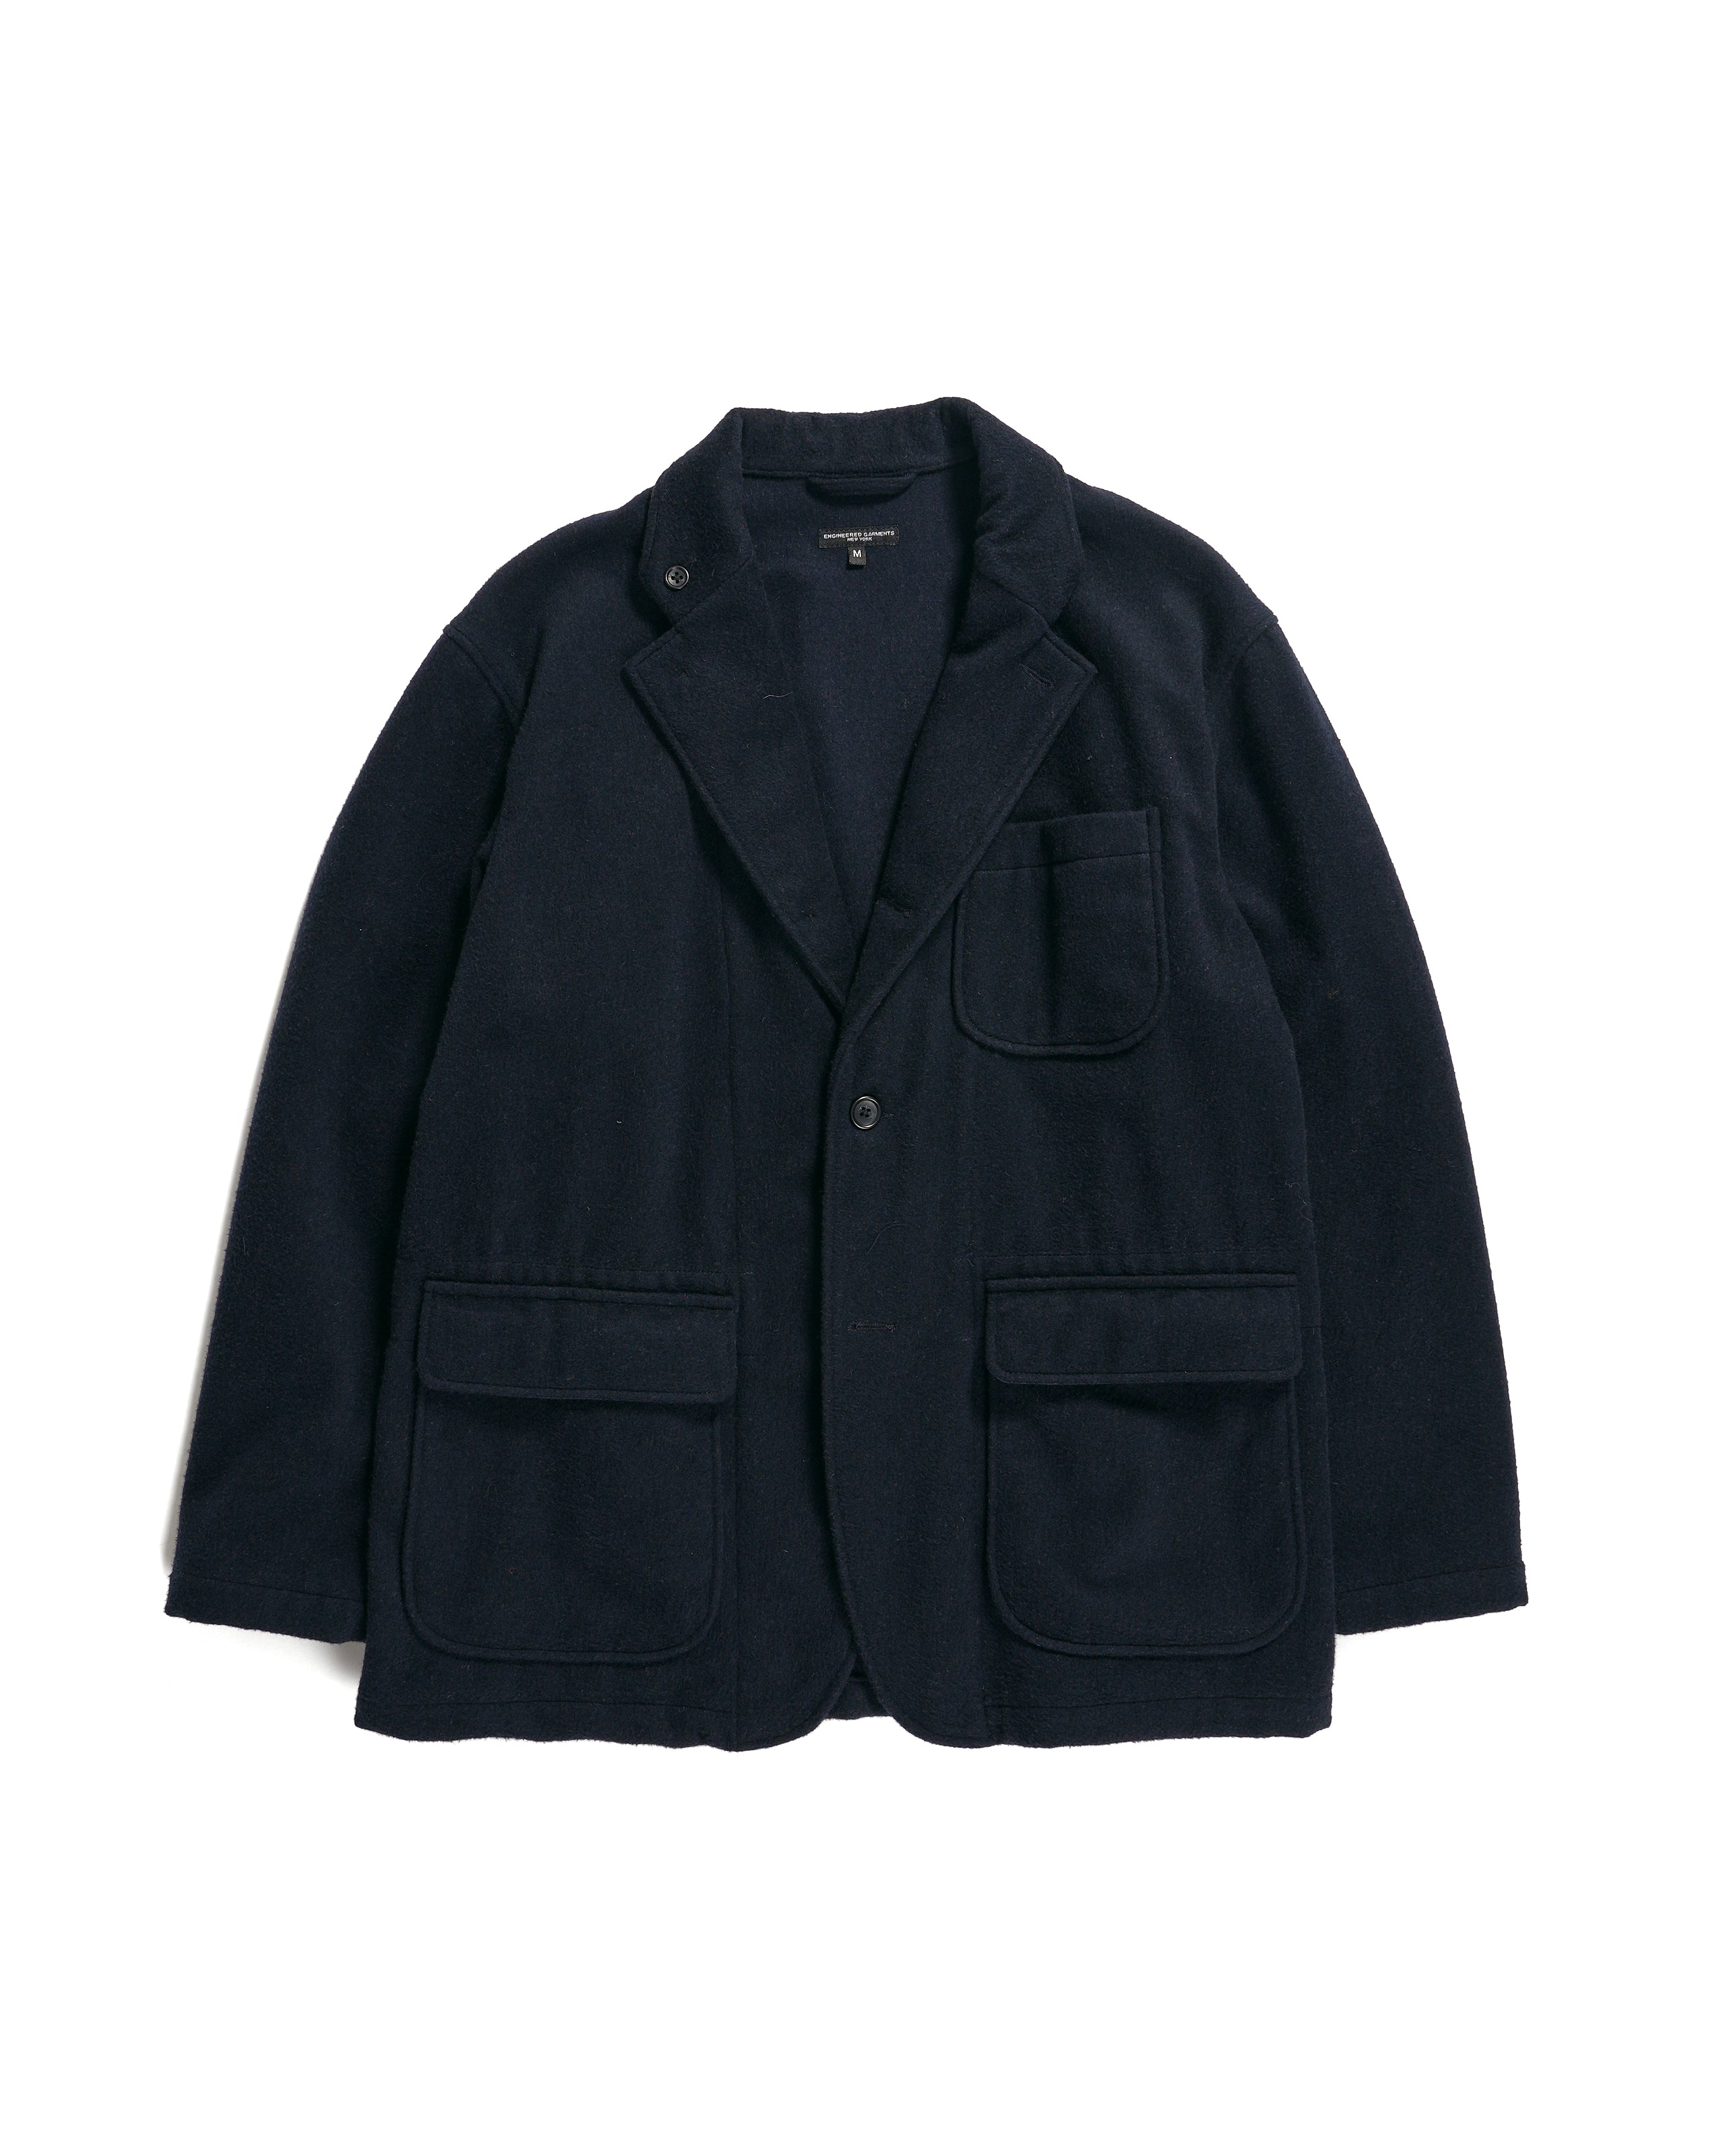 Loiter Jacket - Dk. Navy Wool Polyester Heavy Flannel